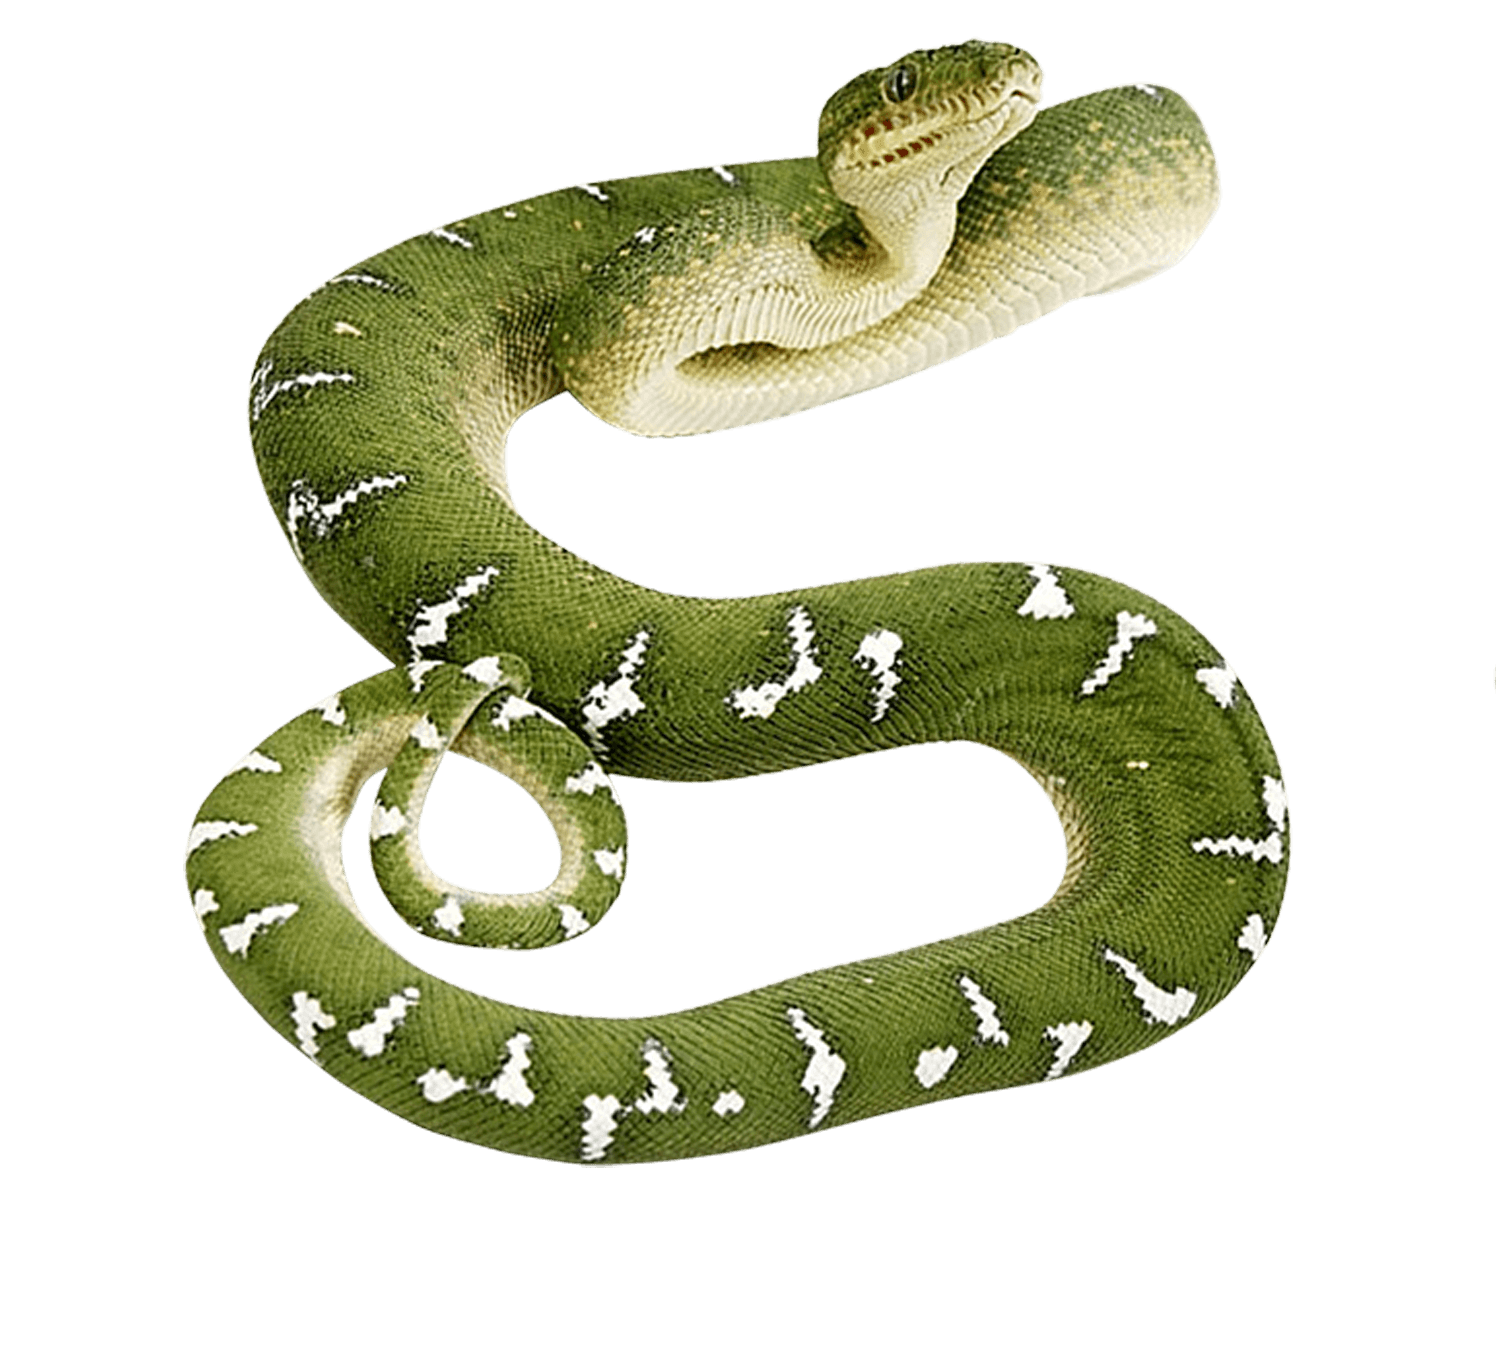 Green Snake Png Image PNG Image